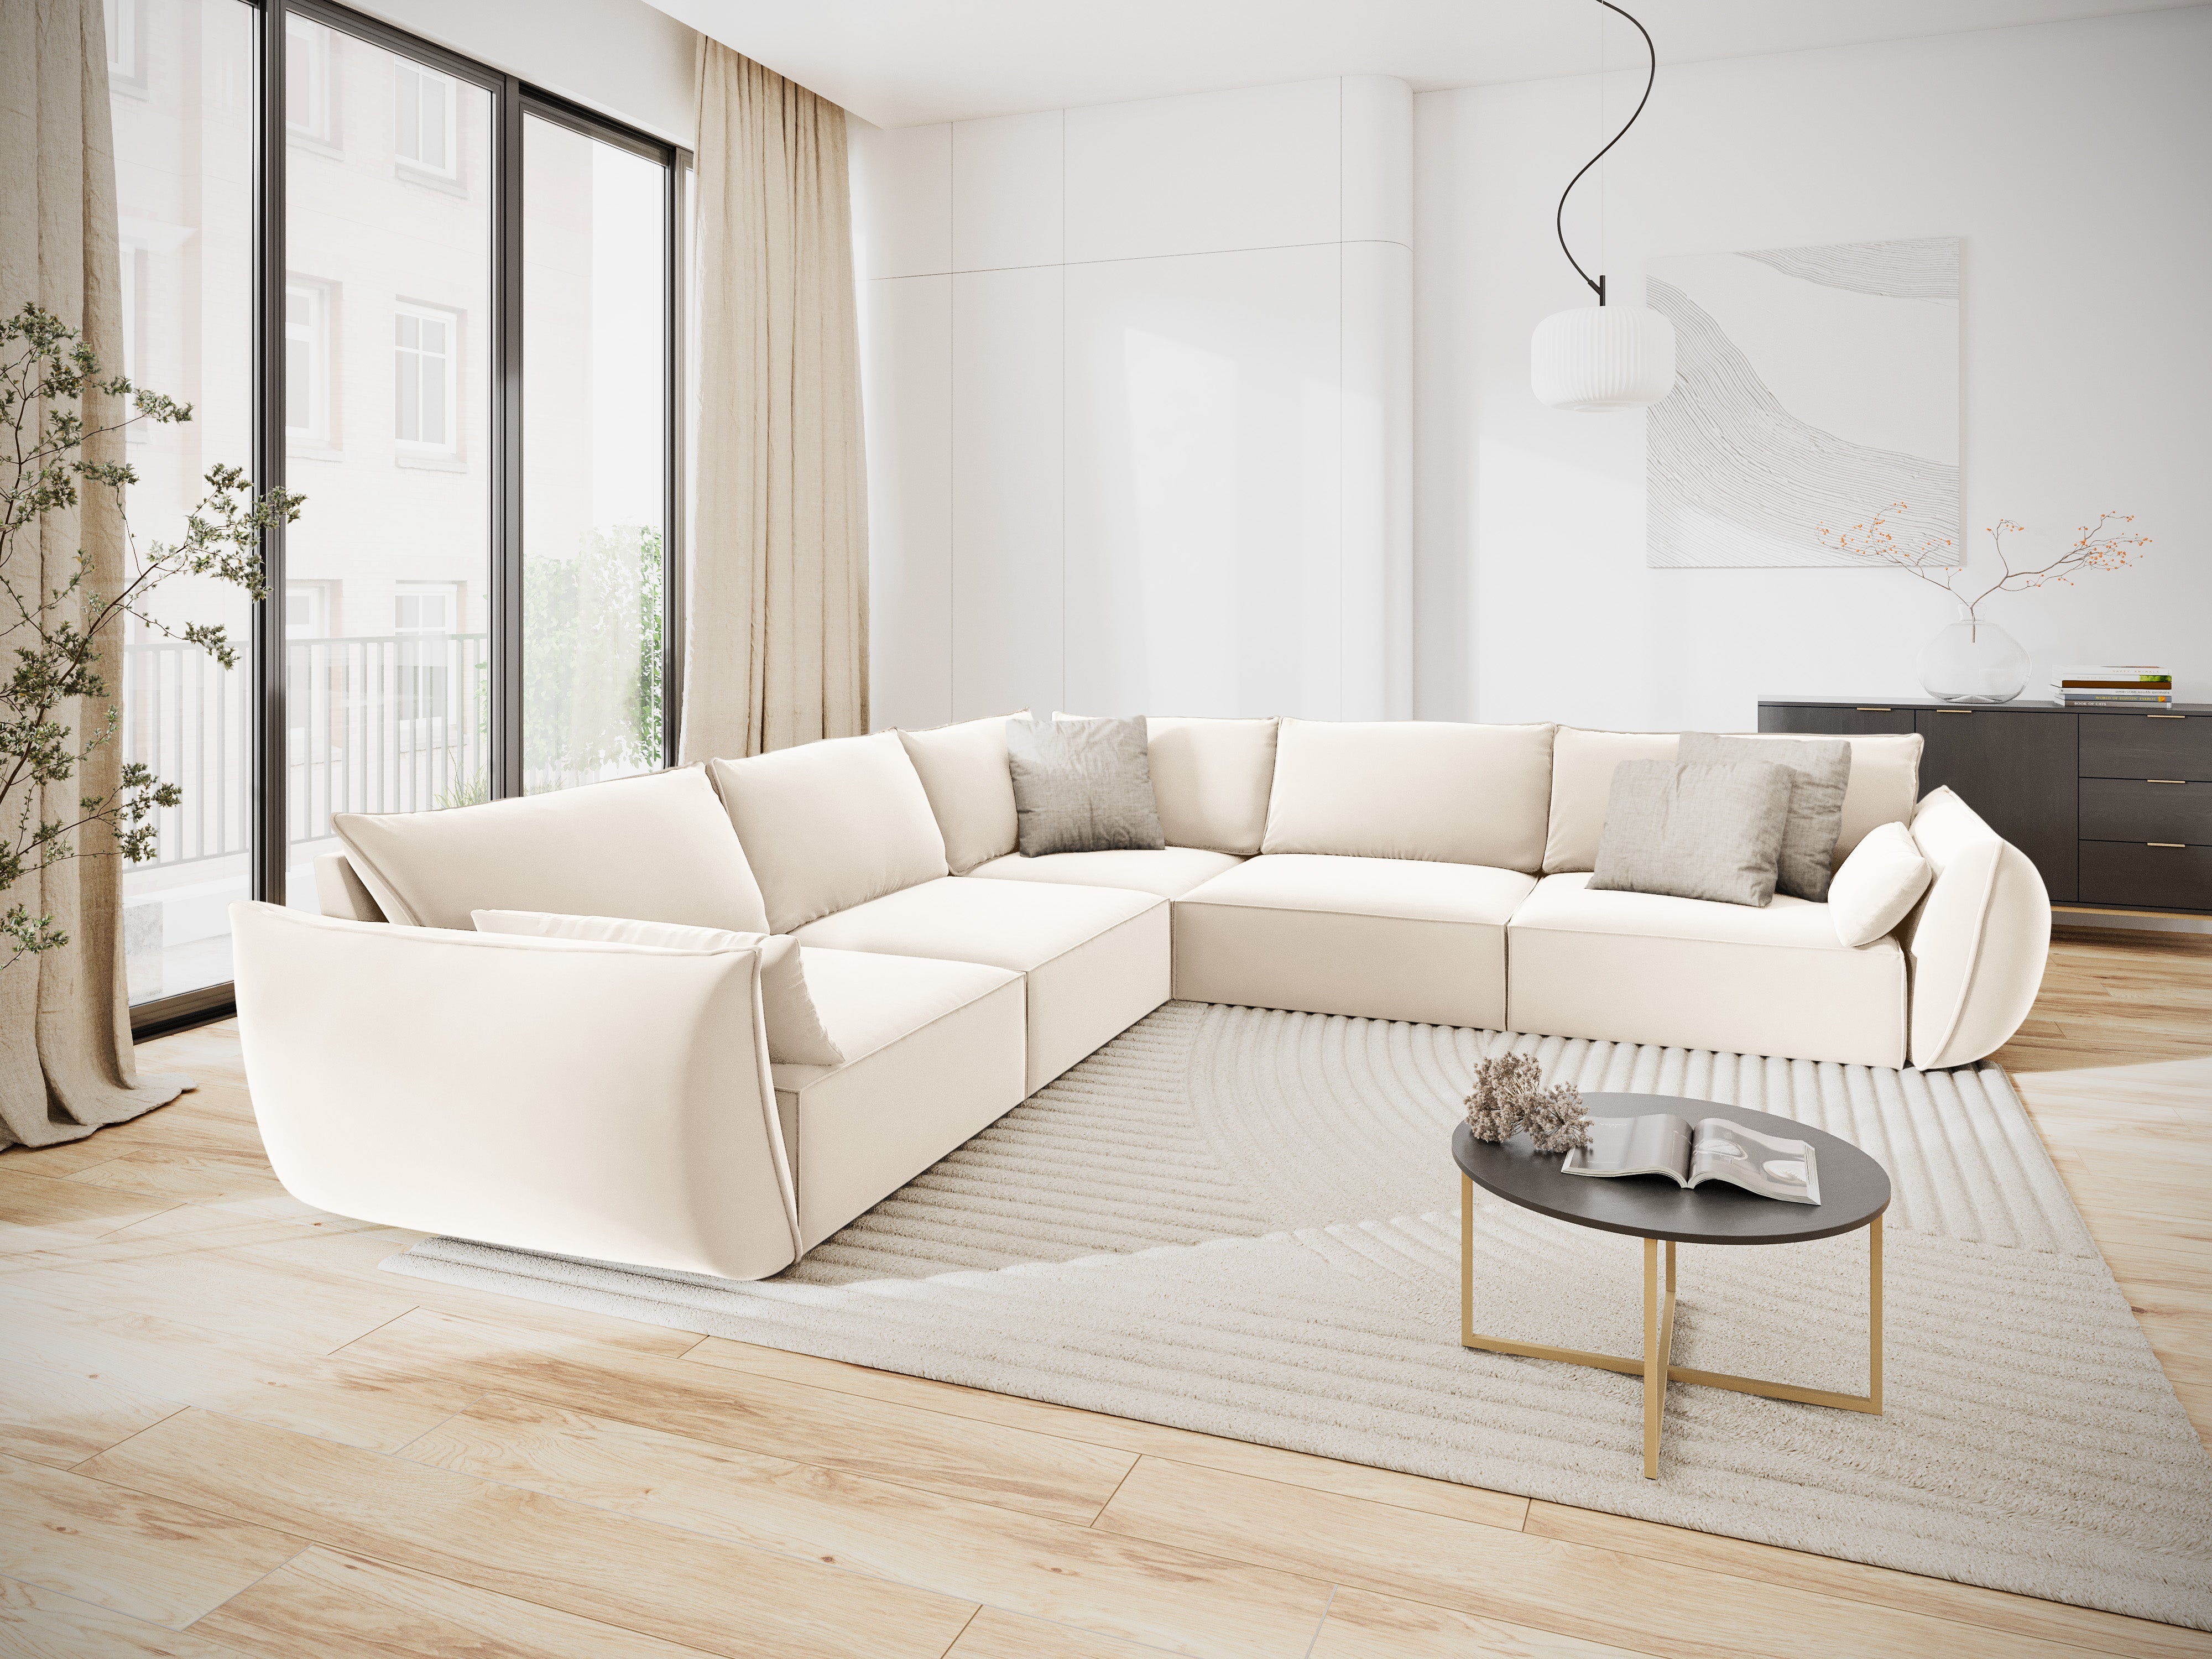 Velvet Symmetrical Corner Sofa, "Vanda", 7 Seats, 286x286x85
Made in Europe, Mazzini Sofas, Eye on Design